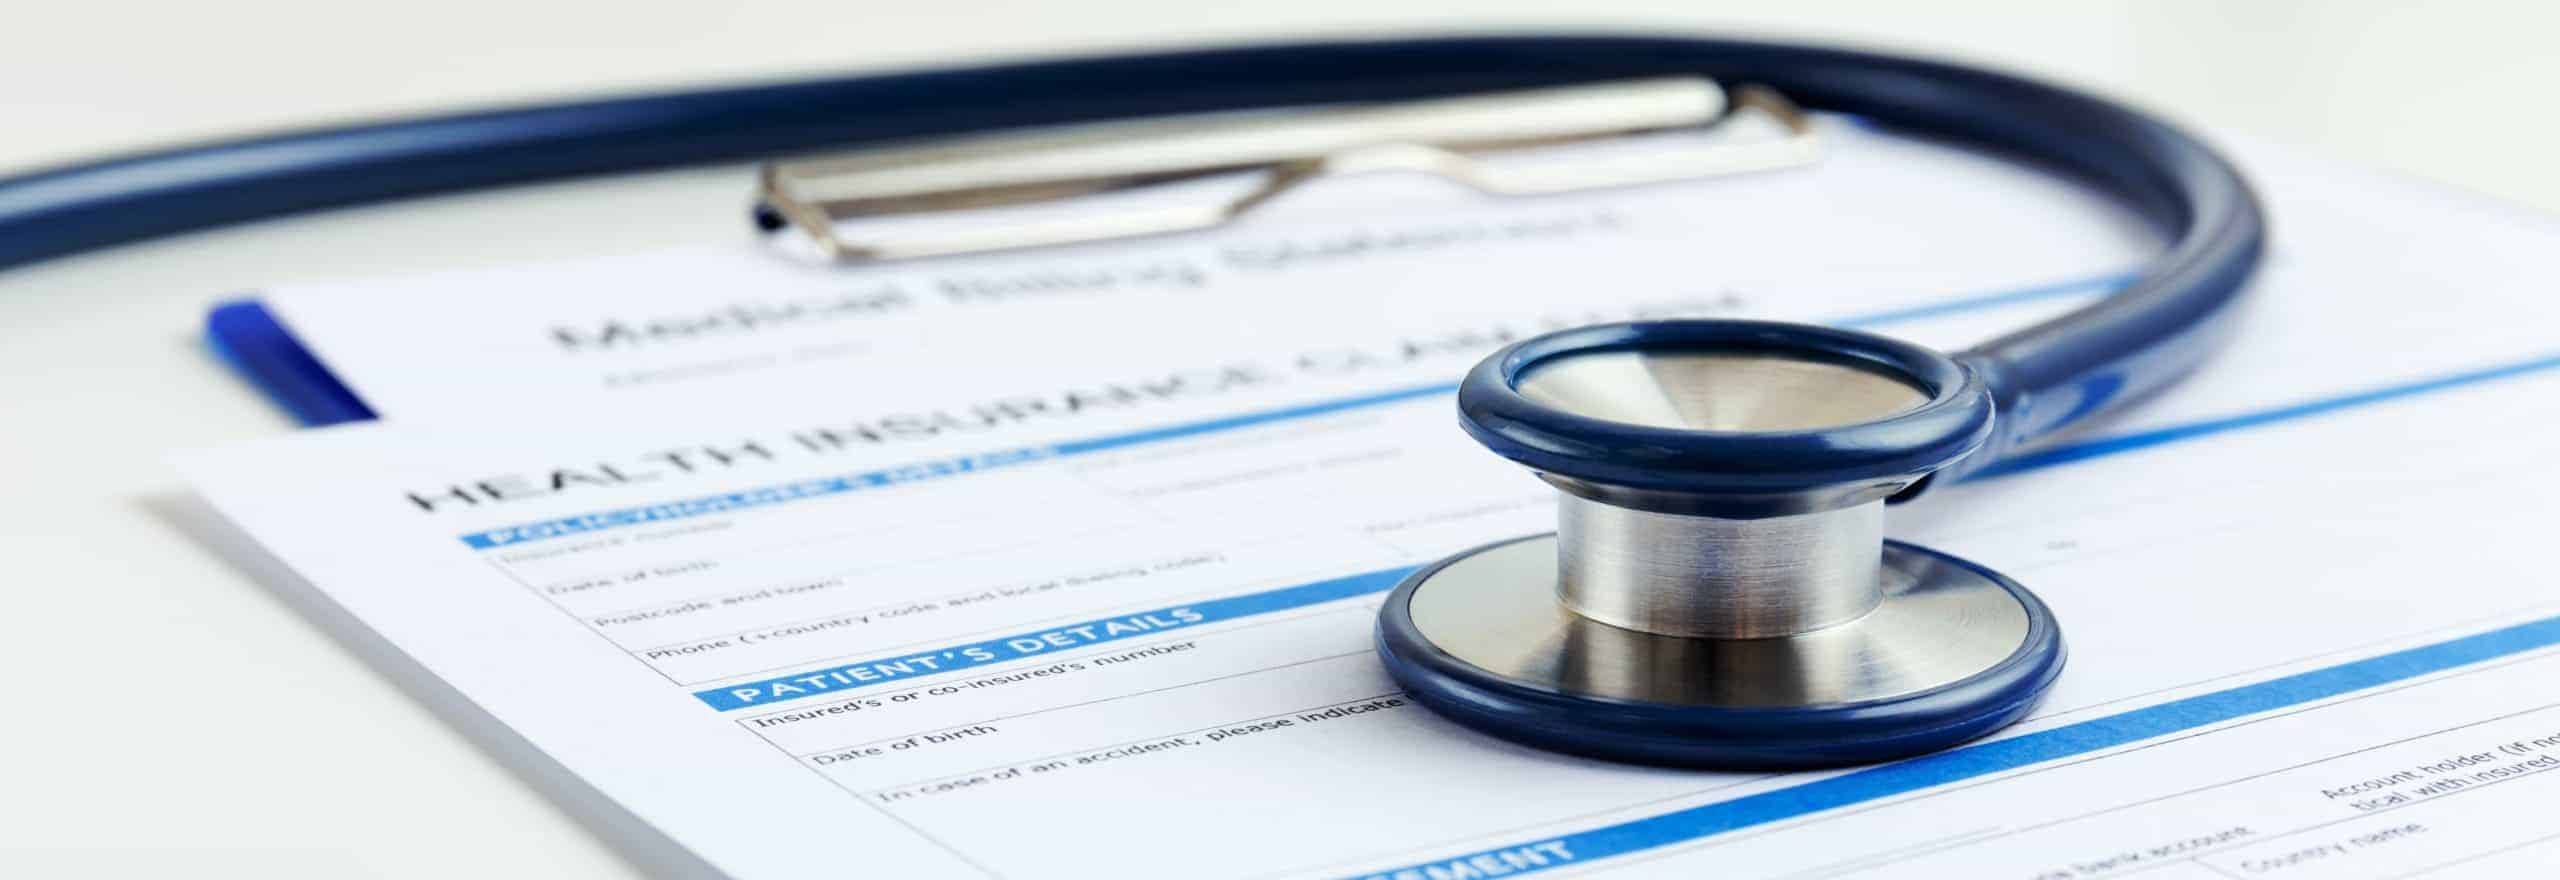 Aetna health insurance form